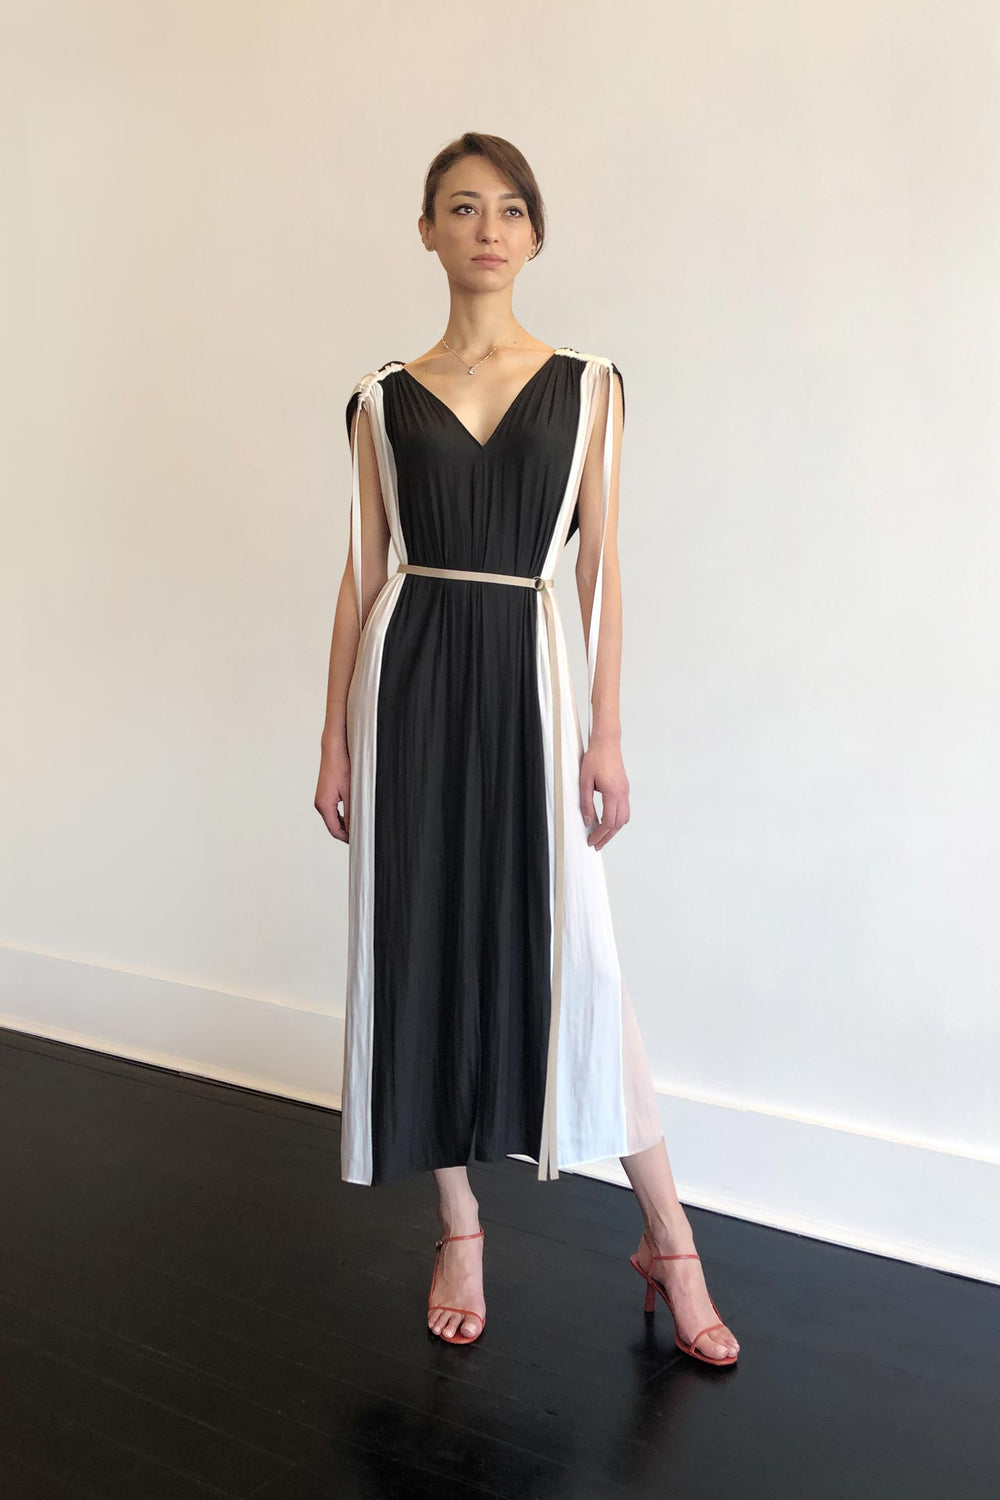 Fashion Designer CARL KAPP collection | Bel Air Onesize Fits All Dress Charcoal | Sydney Australia